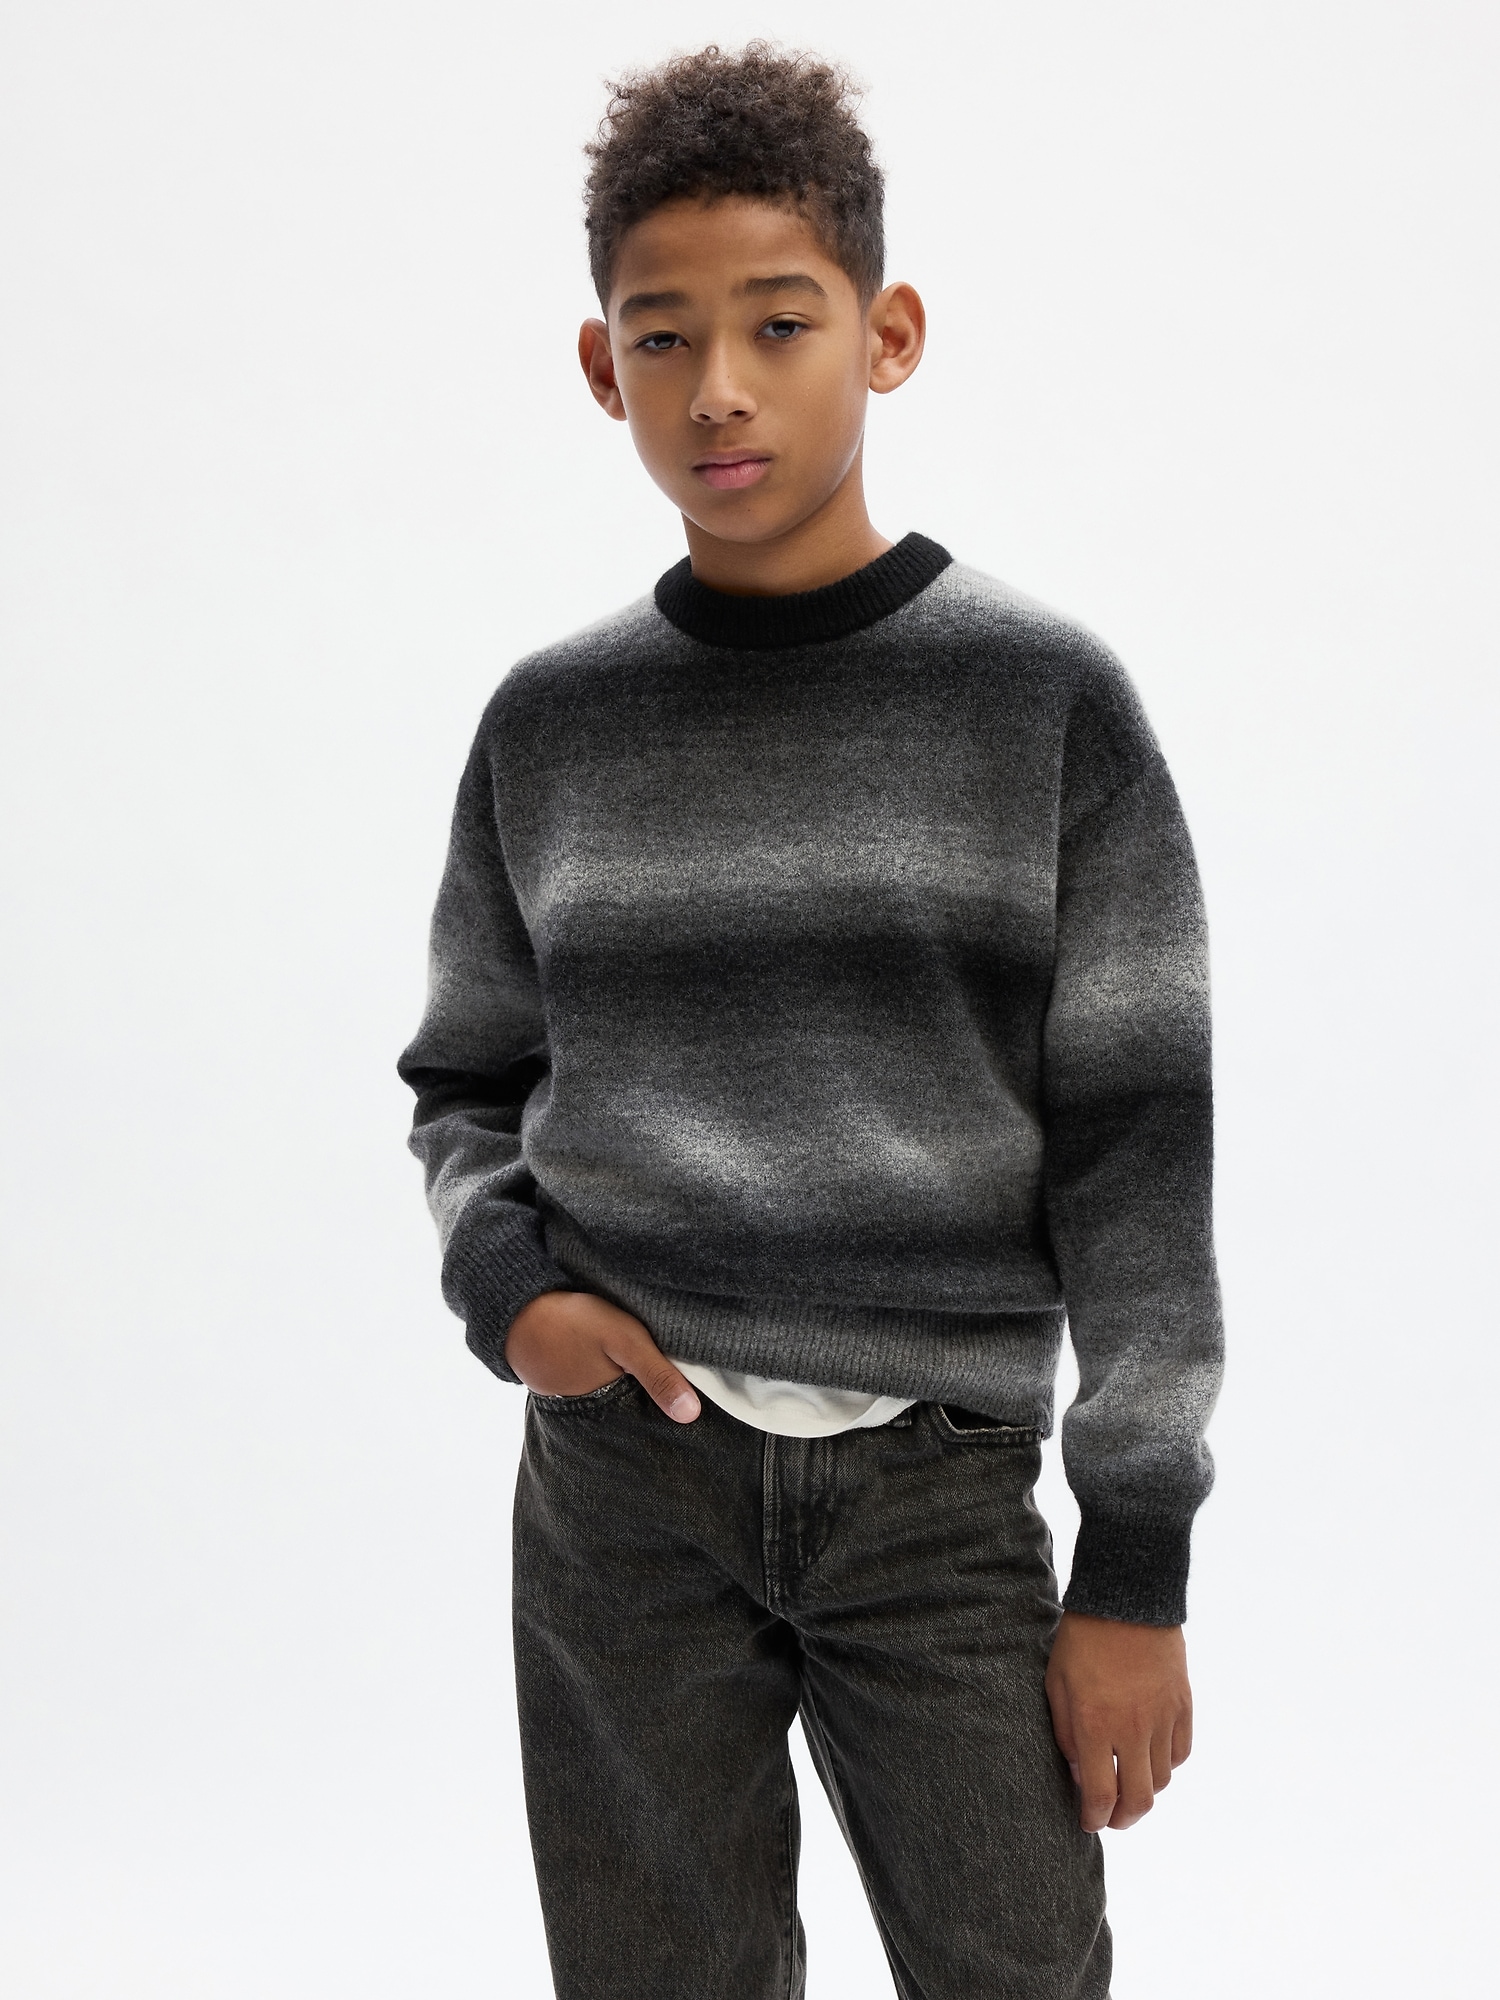 Kids Gap Pullovers |